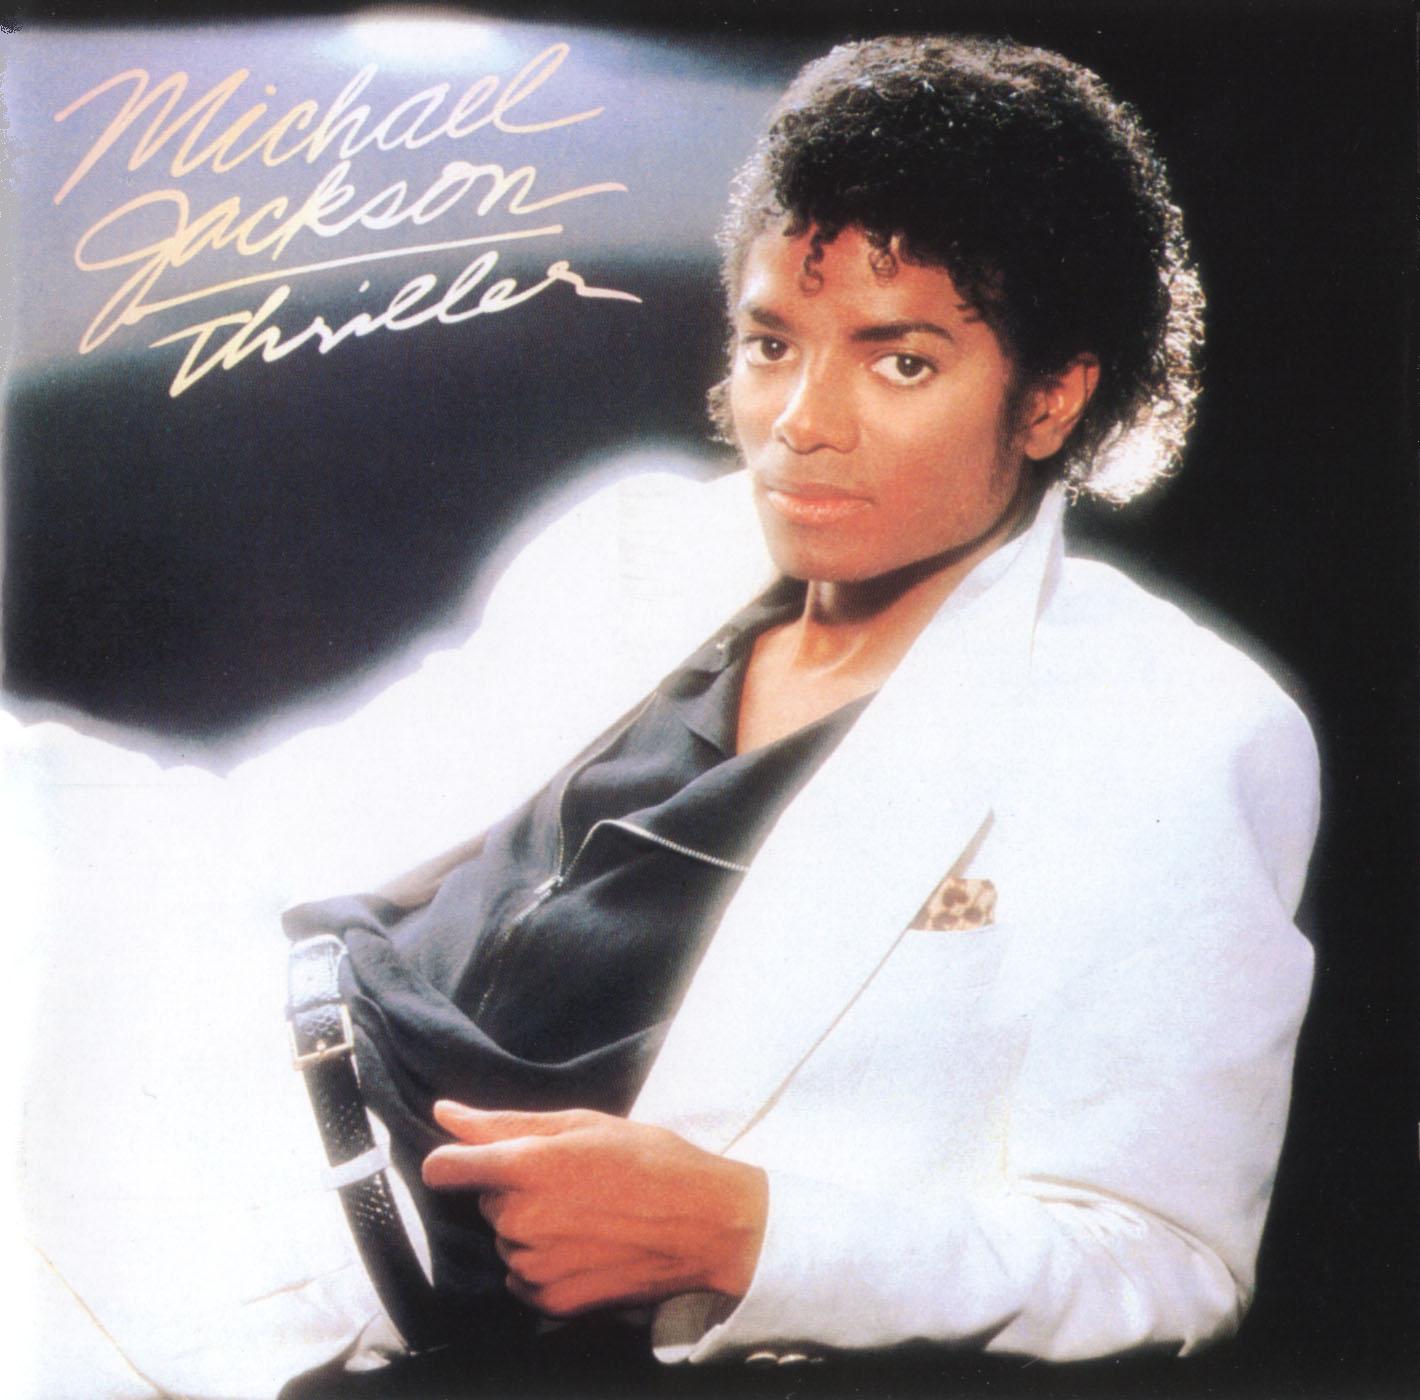 http://4.bp.blogspot.com/_xedH4e8Kv90/TDiHJFGhWvI/AAAAAAAAFrk/r6hEuhwtmwg/s1600/Michael_Jackson-Thriller_(Special_Edition)-Frontal.jpg